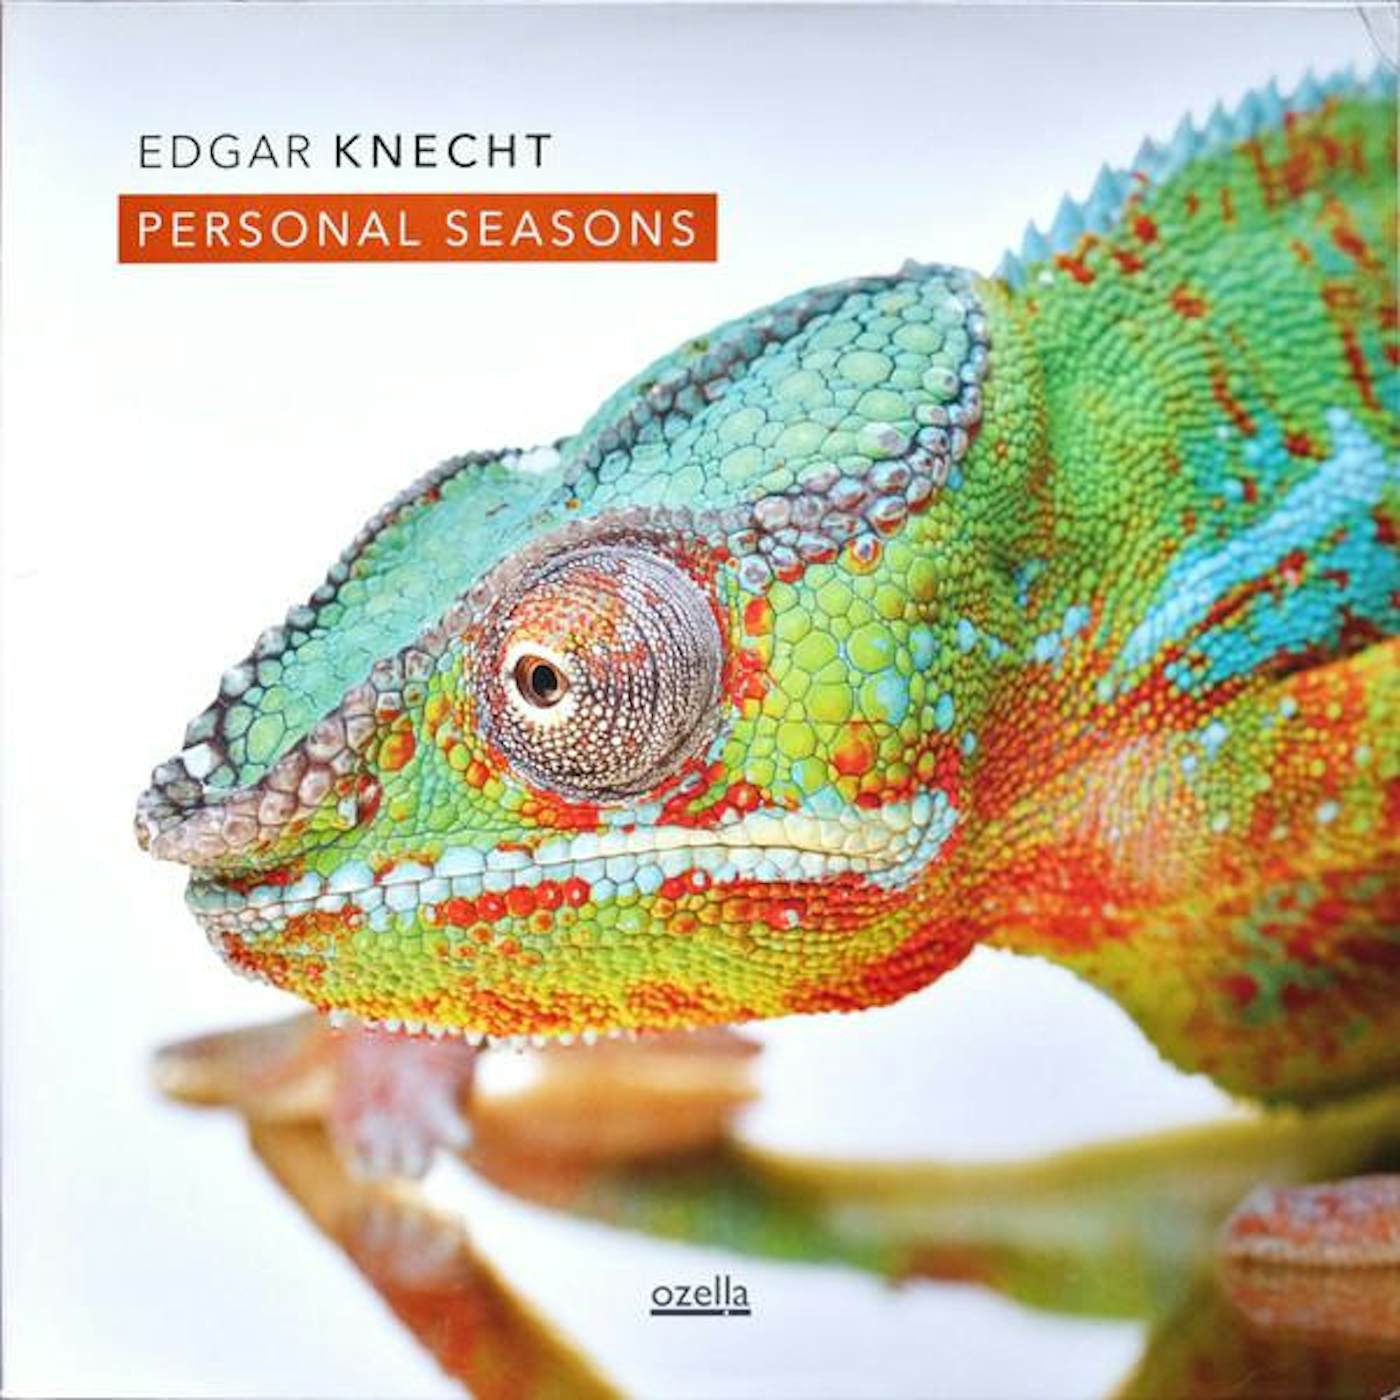 Edgar Knecht PERSONAL SEASONS Vinyl Record